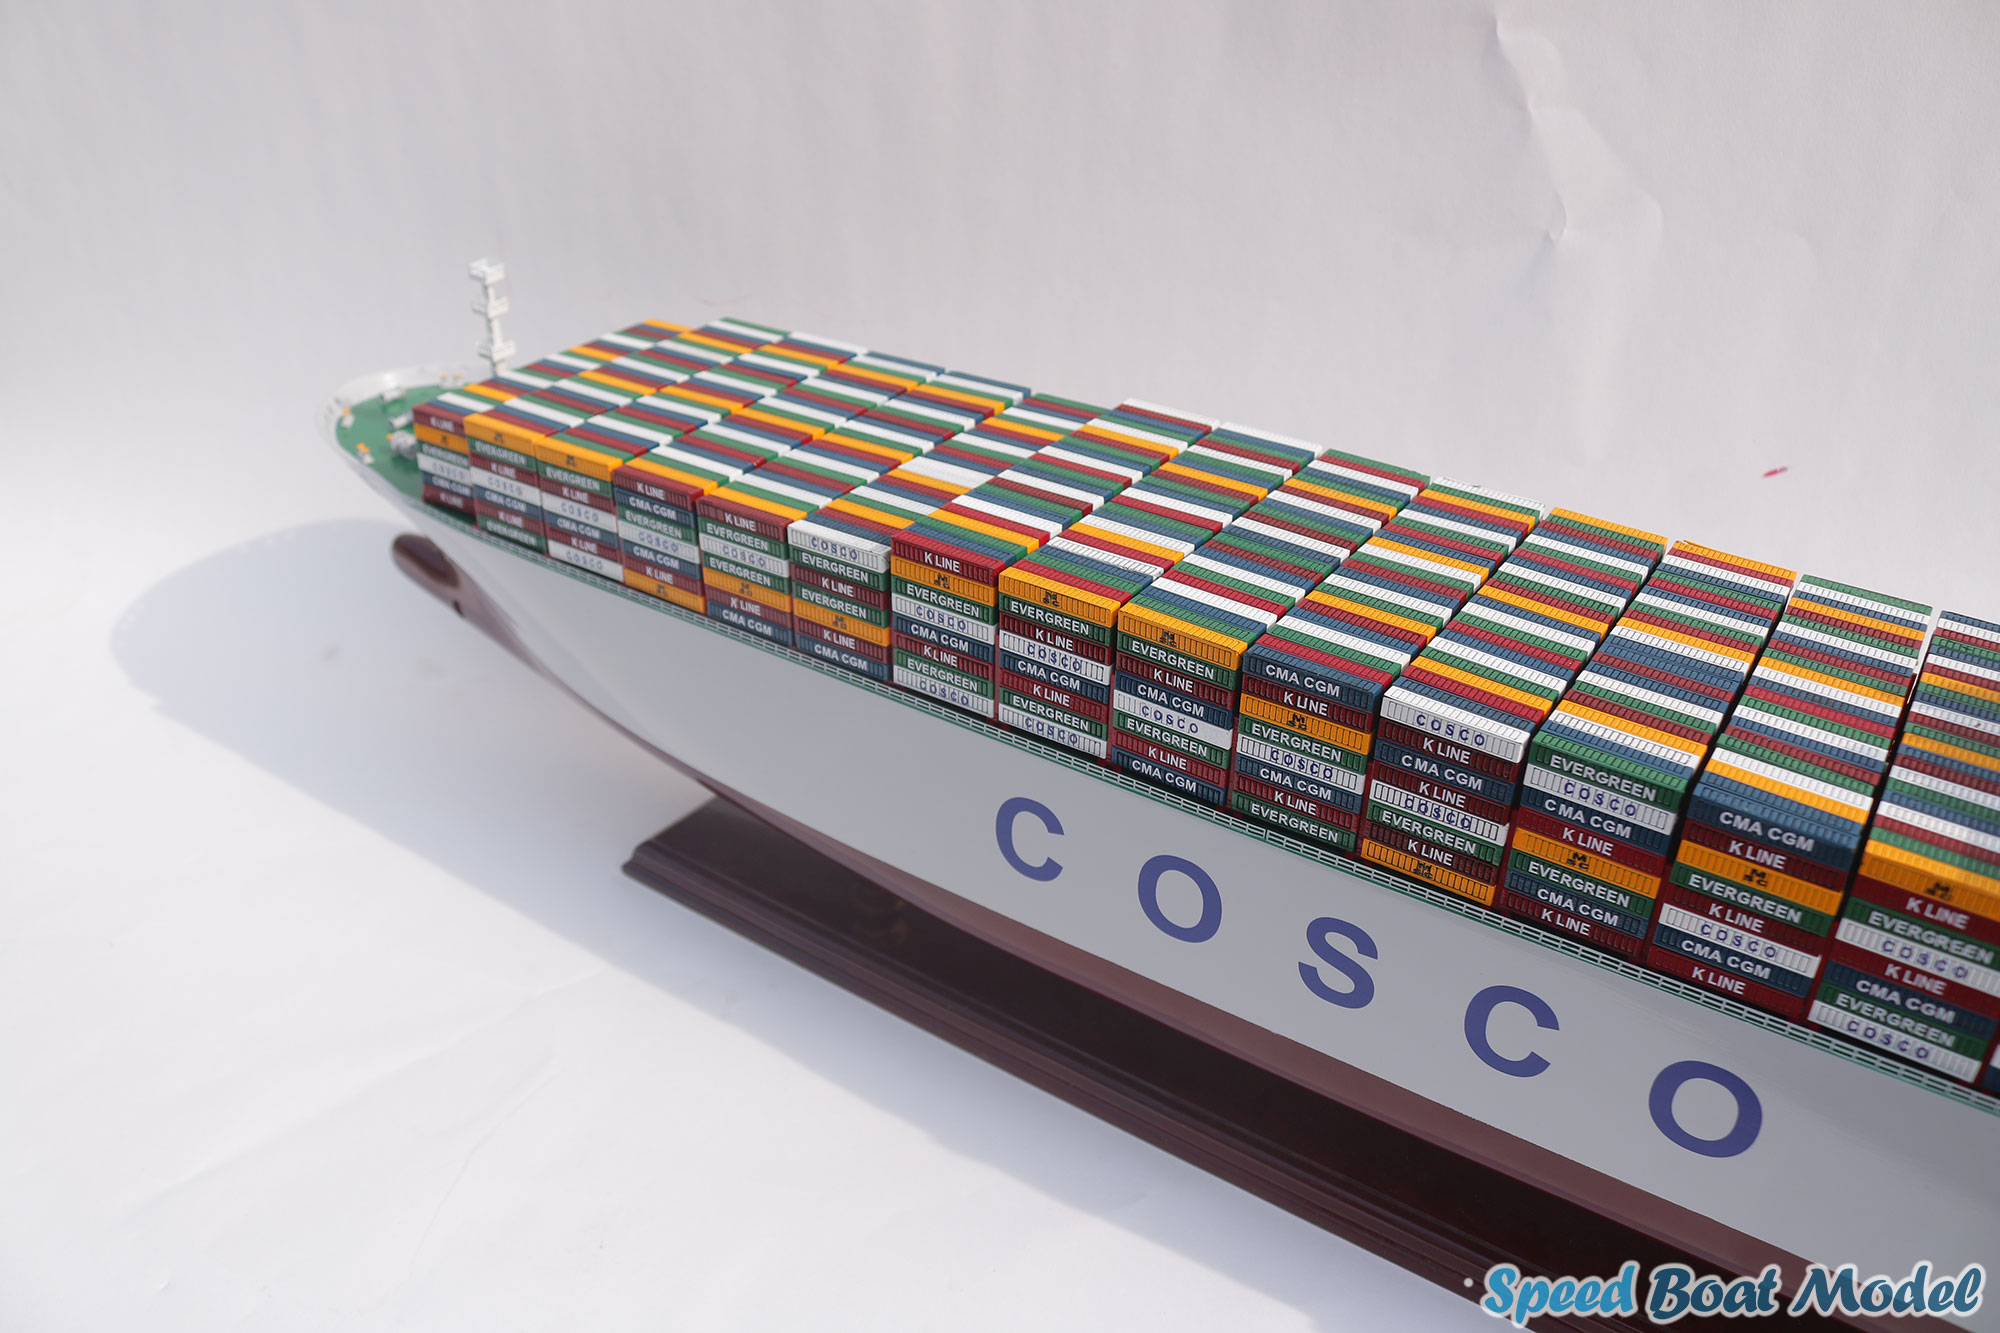 Cosco Europe Commercial Ship Model 39.3